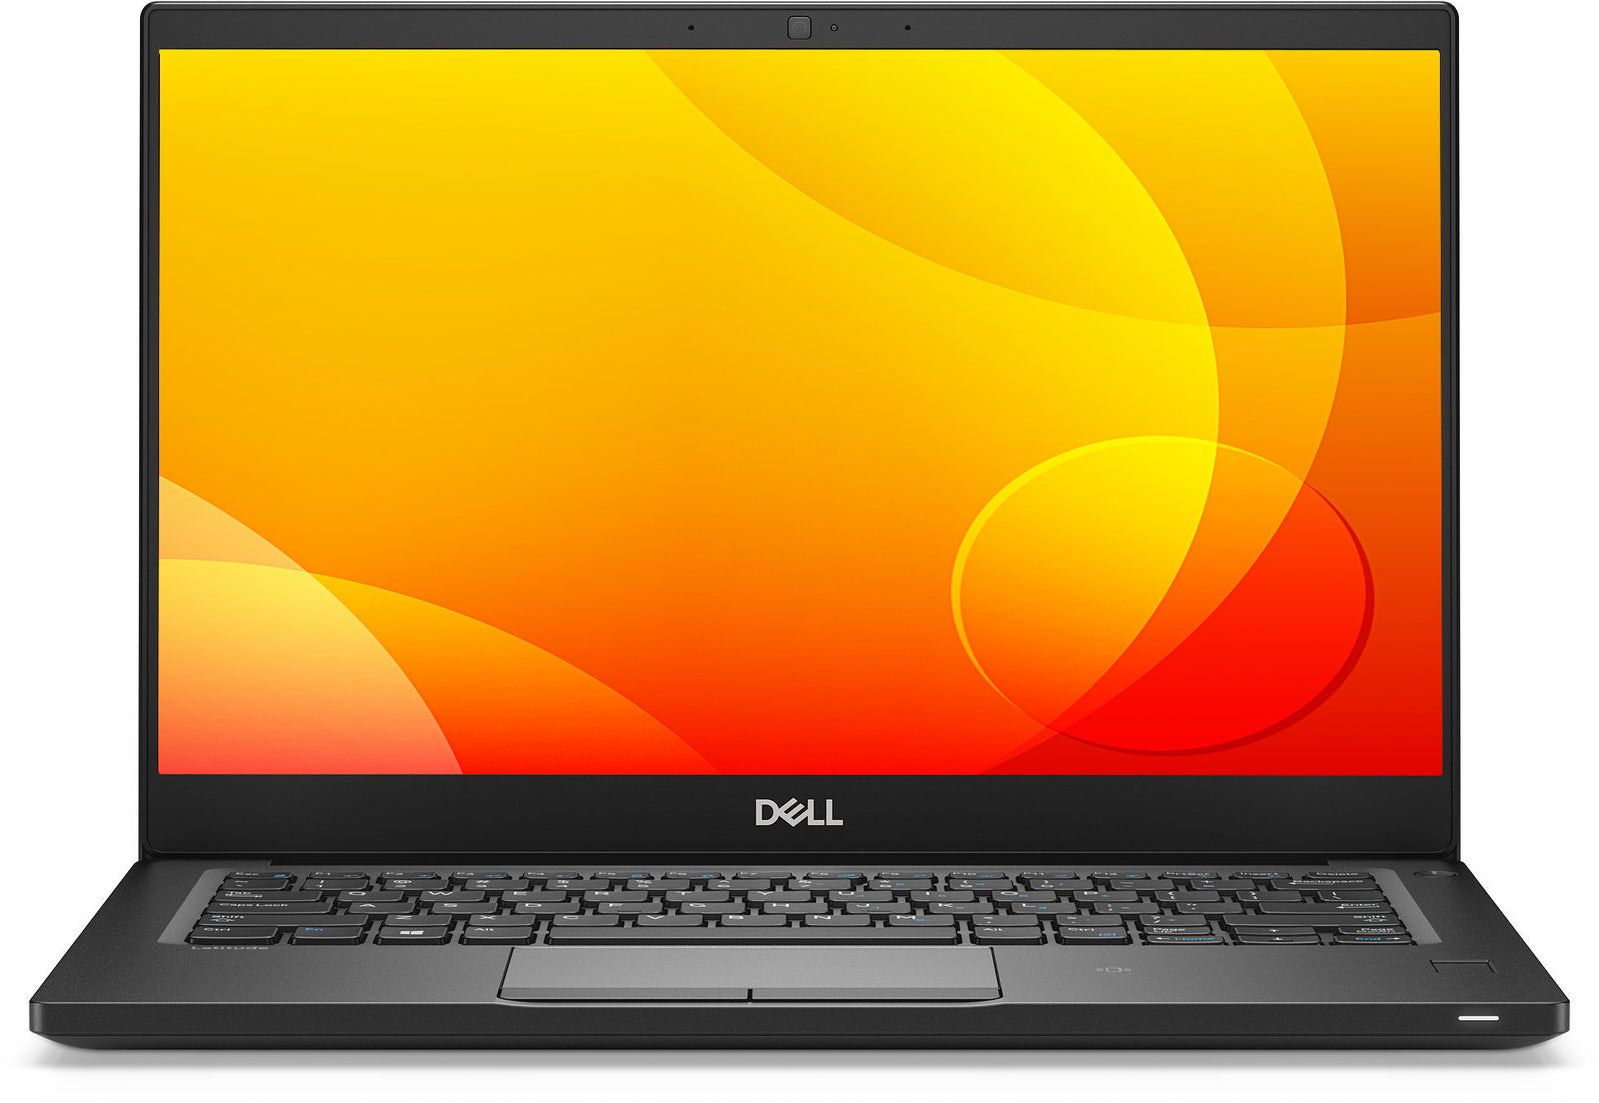 Dell Latitude 7390 13.3" Laptop i5-8250U 256GB 8GB RAM - Windows 10 Pro - Very Good Condition